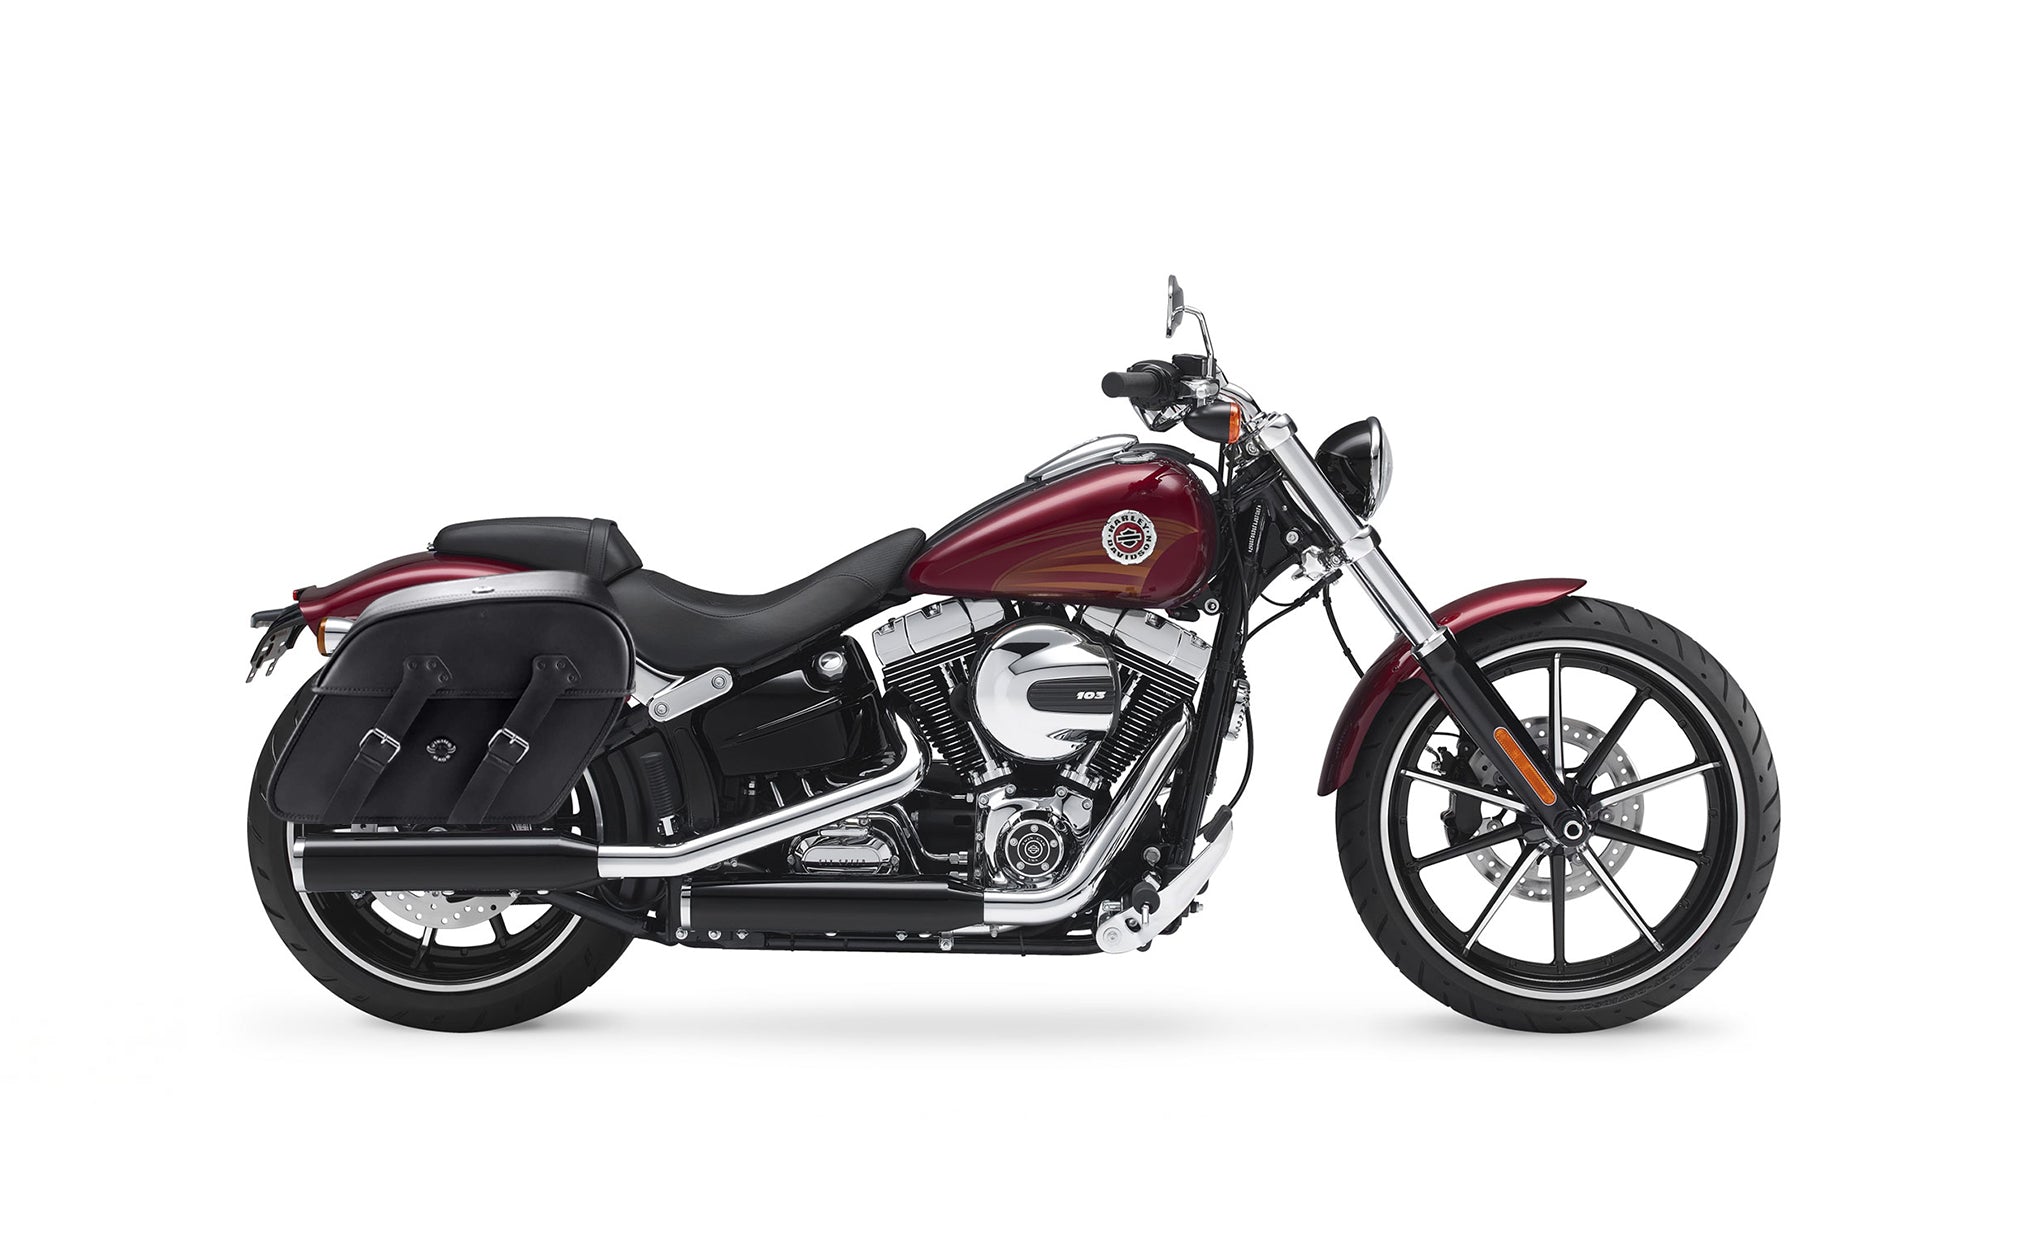 Viking Raven Large Motorcycle Leather Saddlebags For Harley Softail Breakout Fxsb on Bike Photo @expand